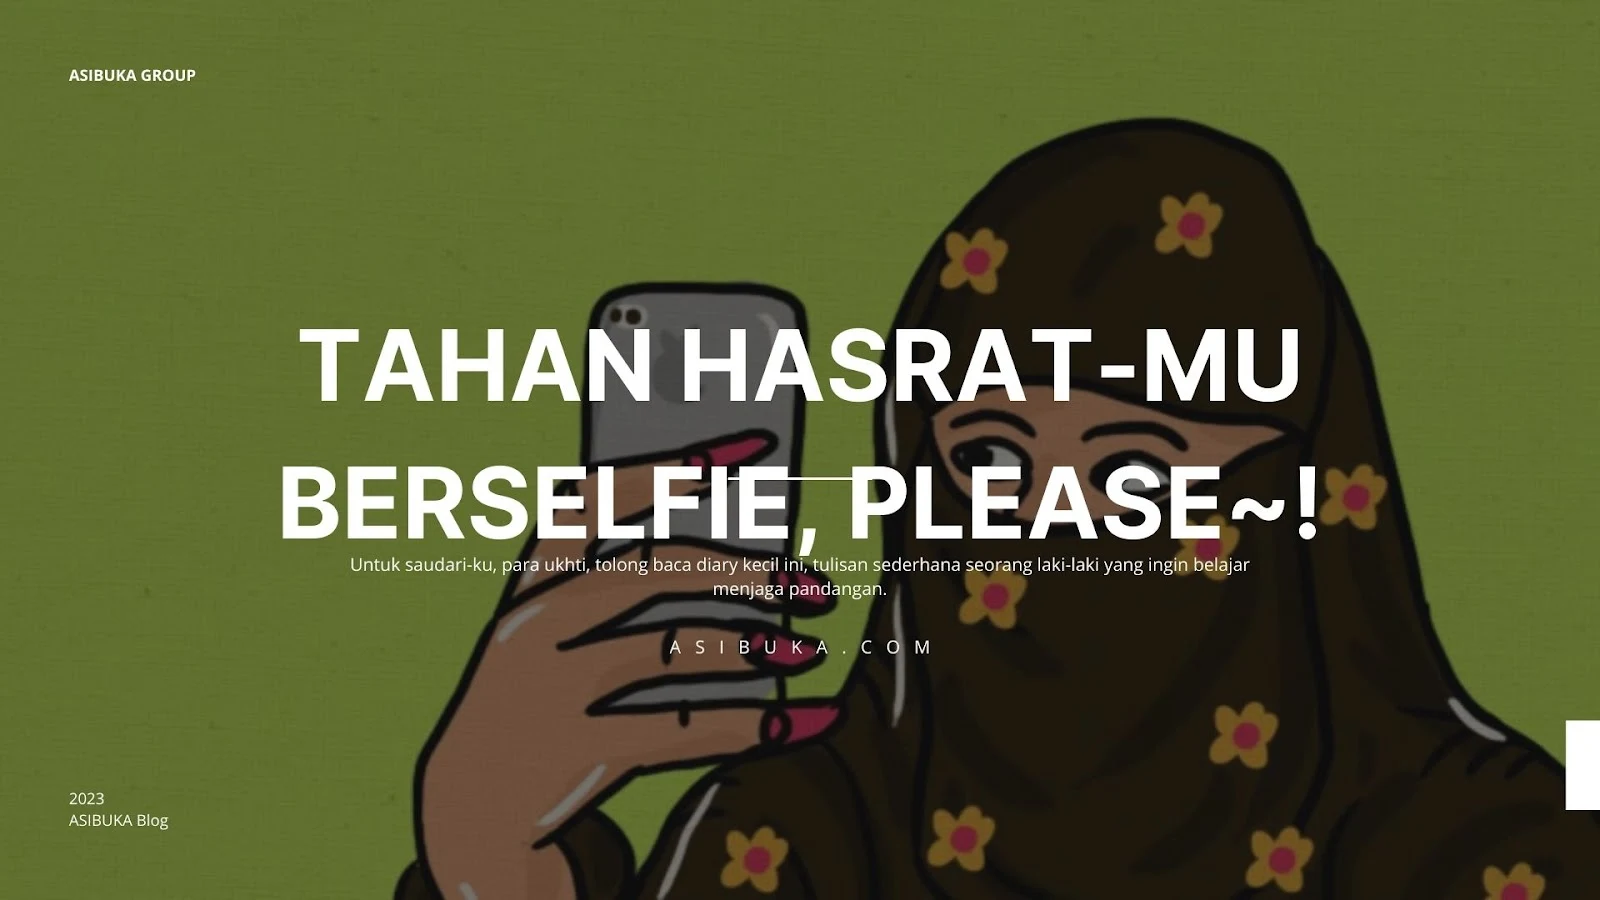 Saudari, Tahan Hasrat-mu berselfie, Please~!